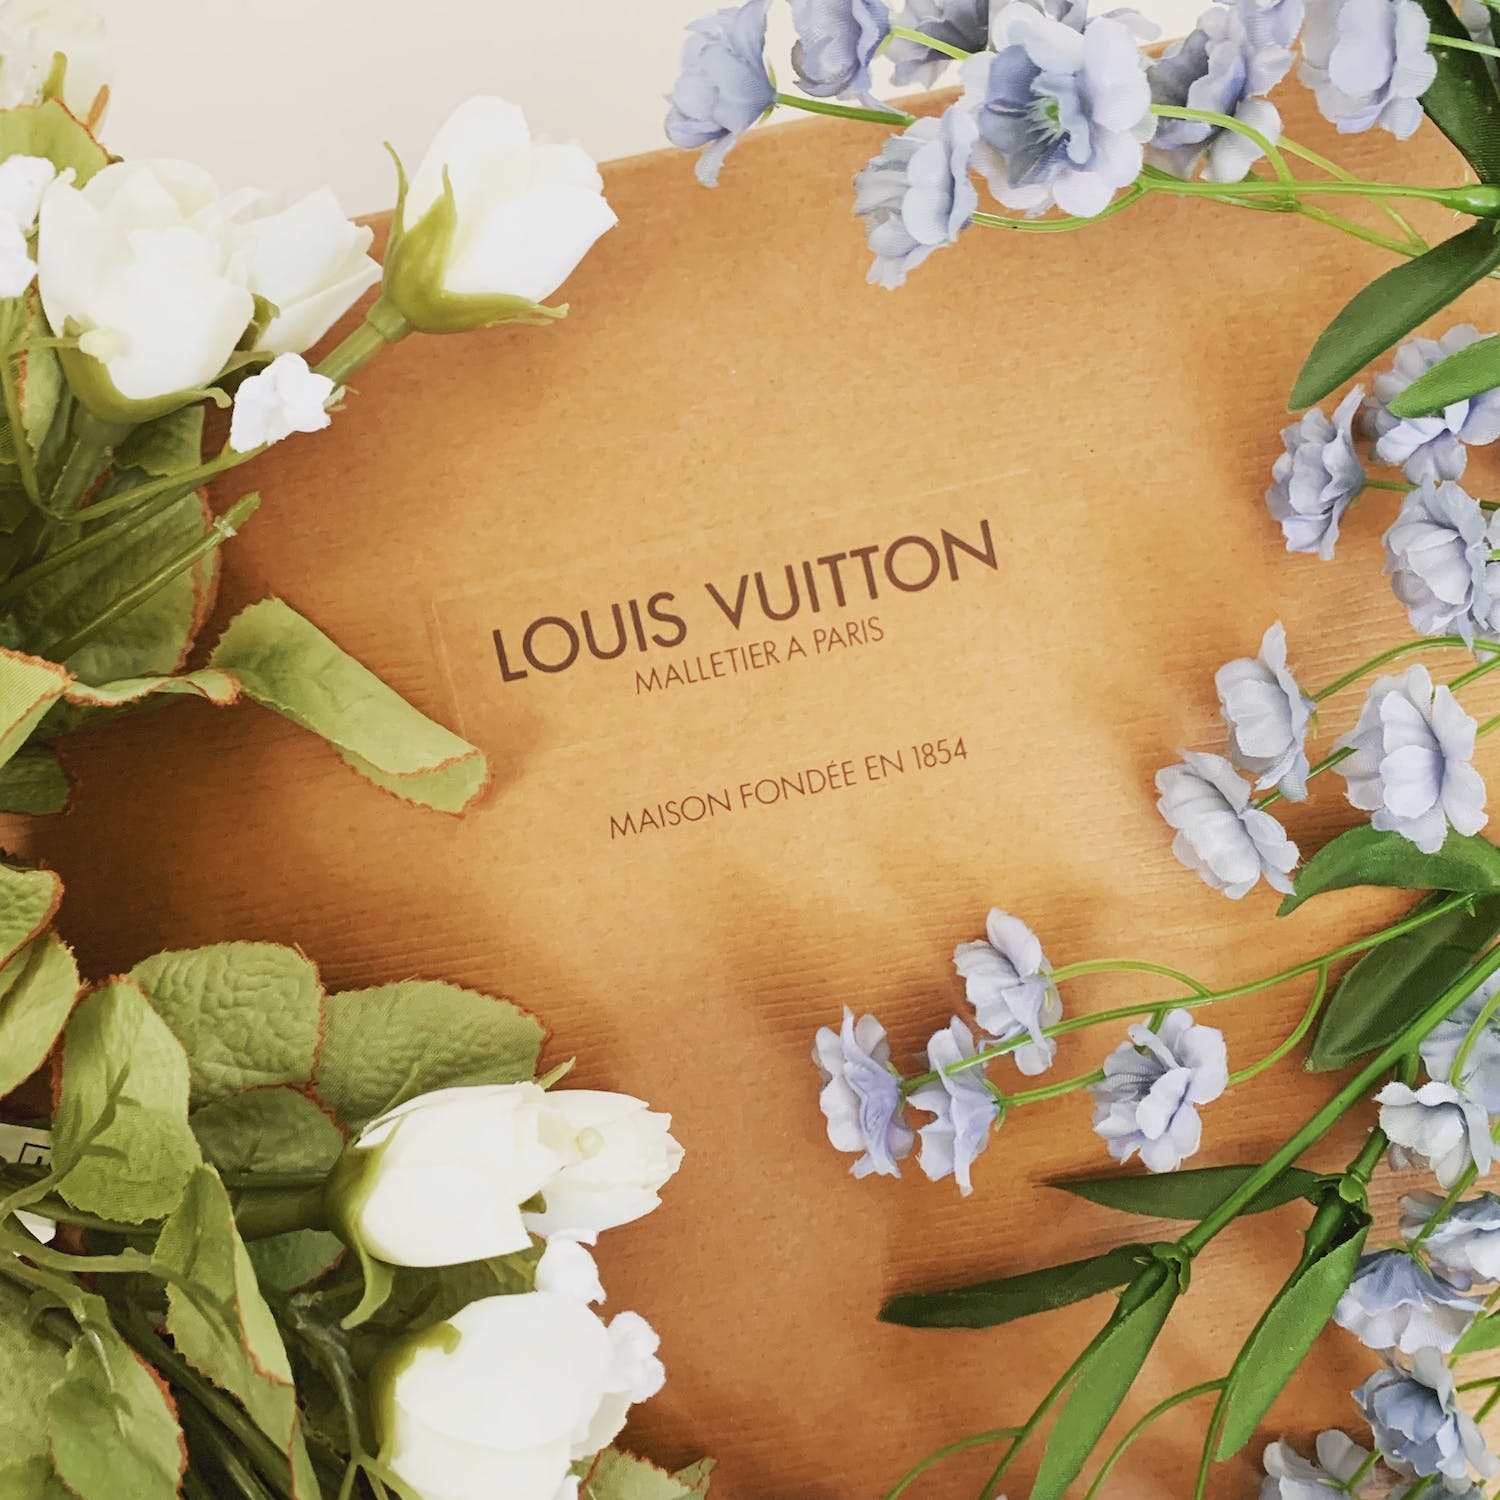 Louis Vuitton Artycapucines: Where Art Meets Fashion - French Quarter  Magazine